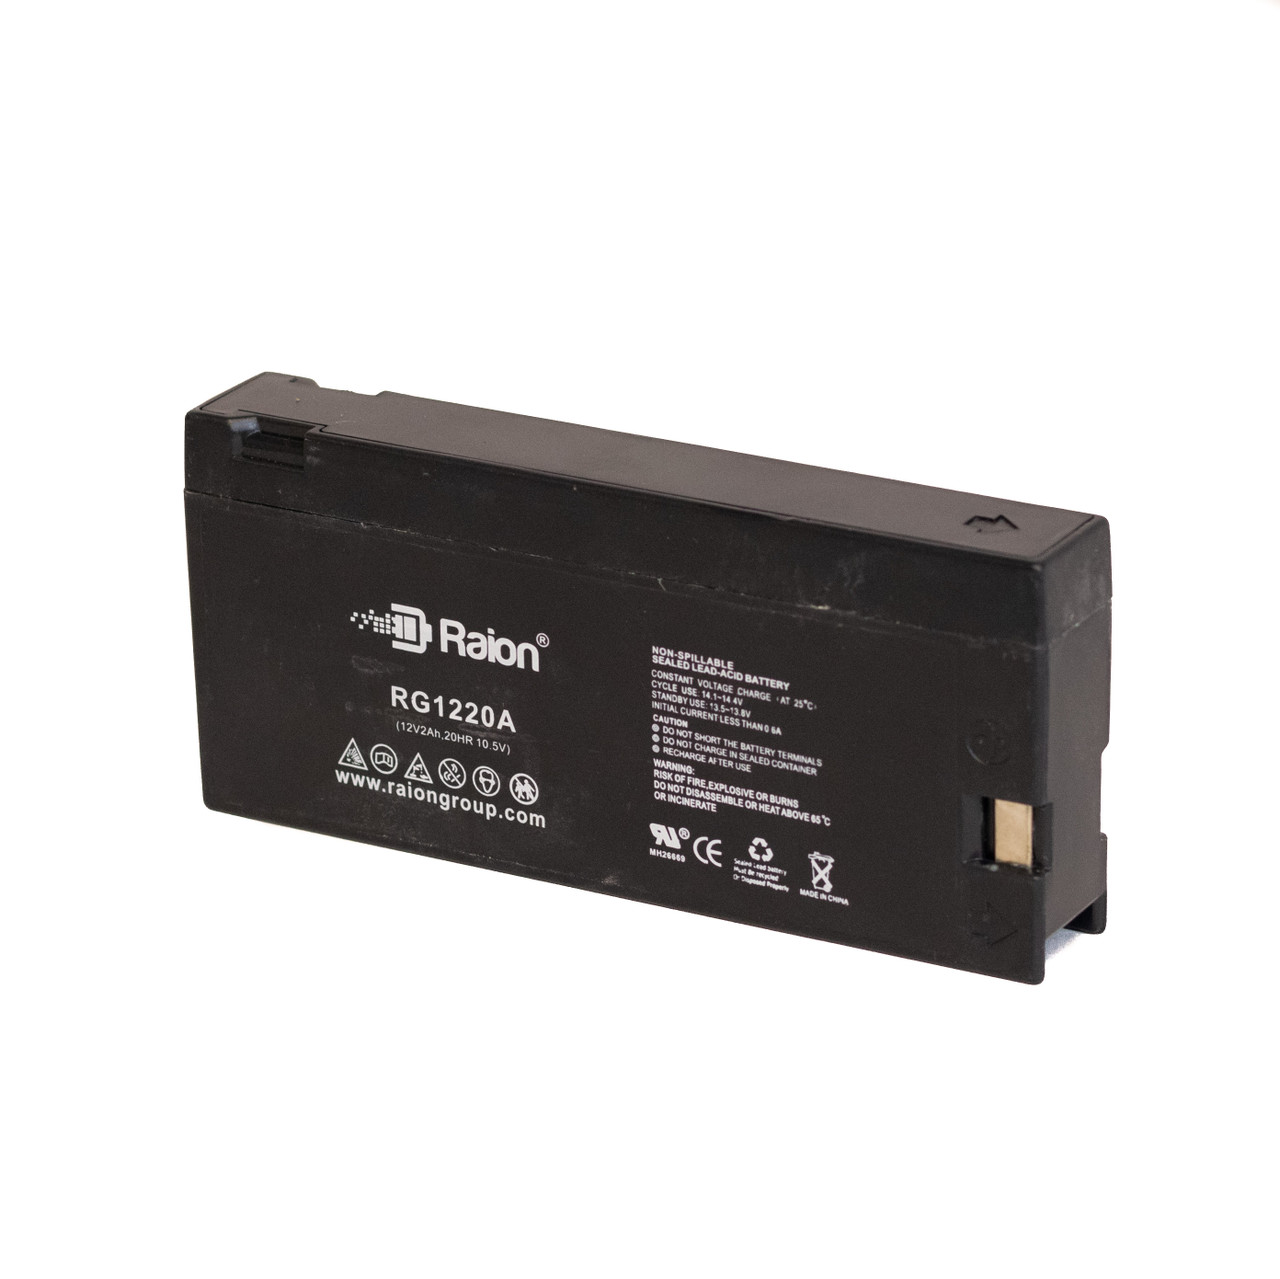 Raion Power RG1220A Replacement Battery for Quasar VM-700